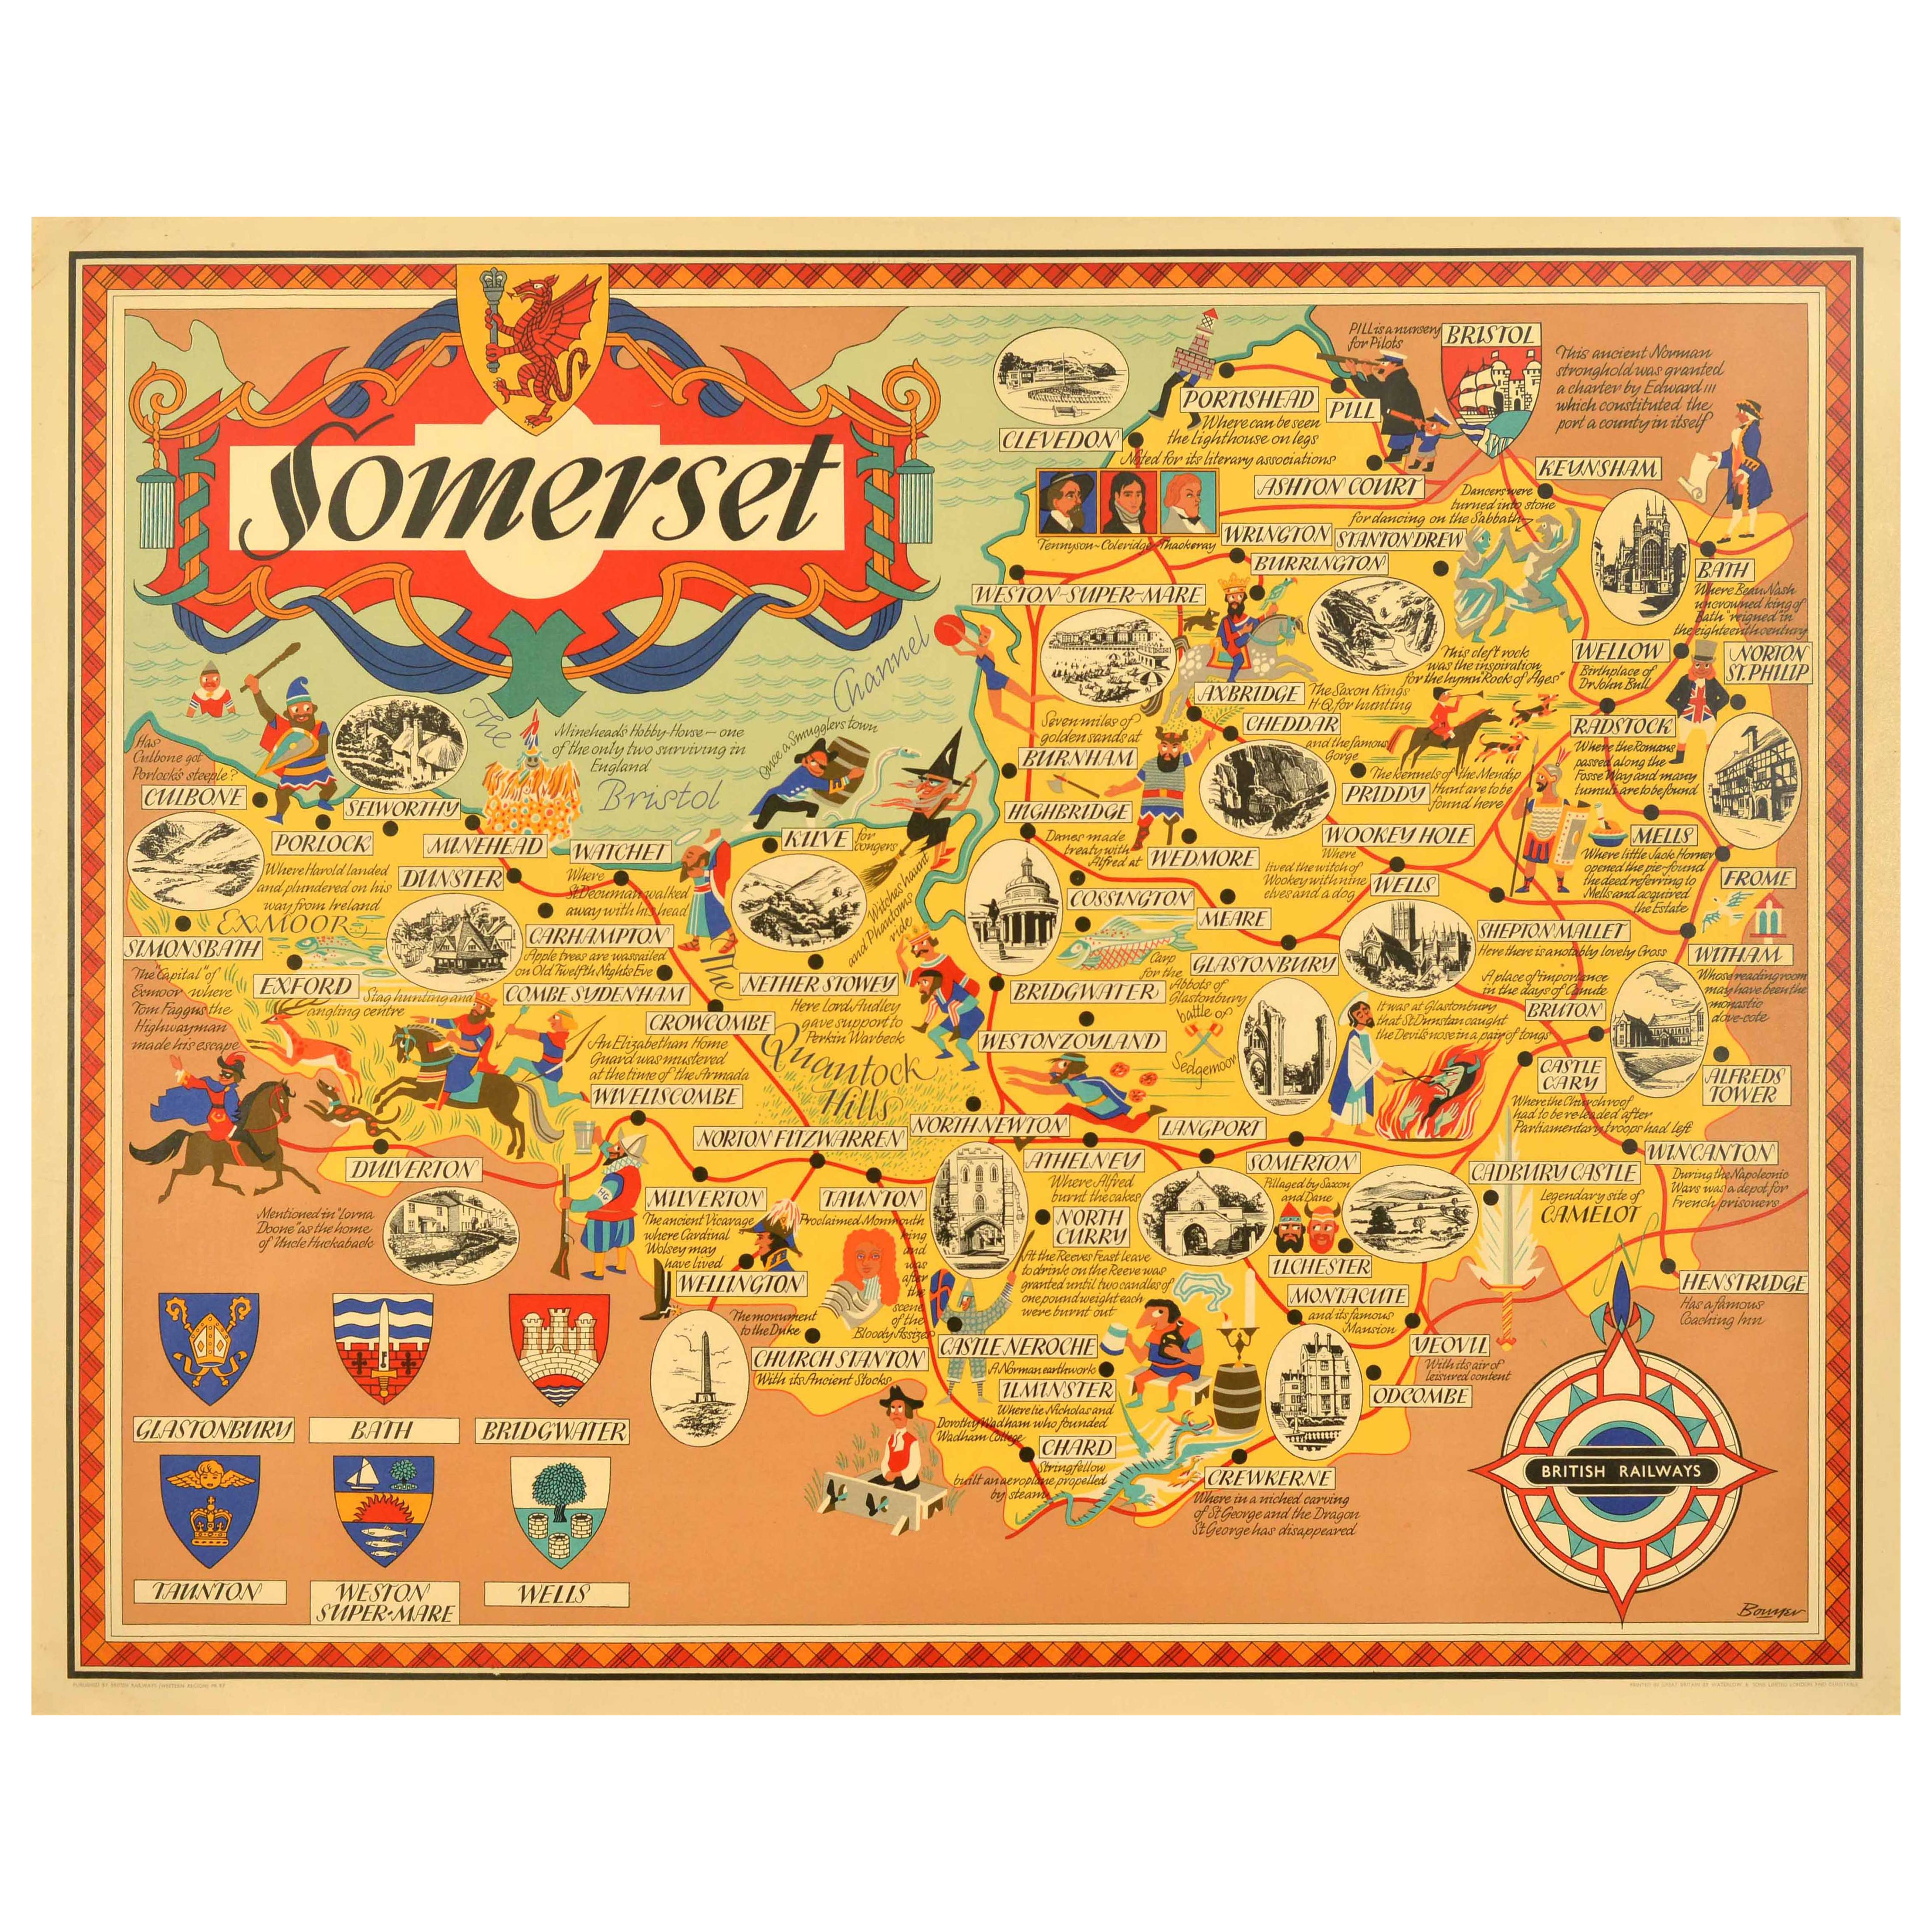 Original Vintage British Railways Train Travel Poster Somerset Pictorial Map UK For Sale